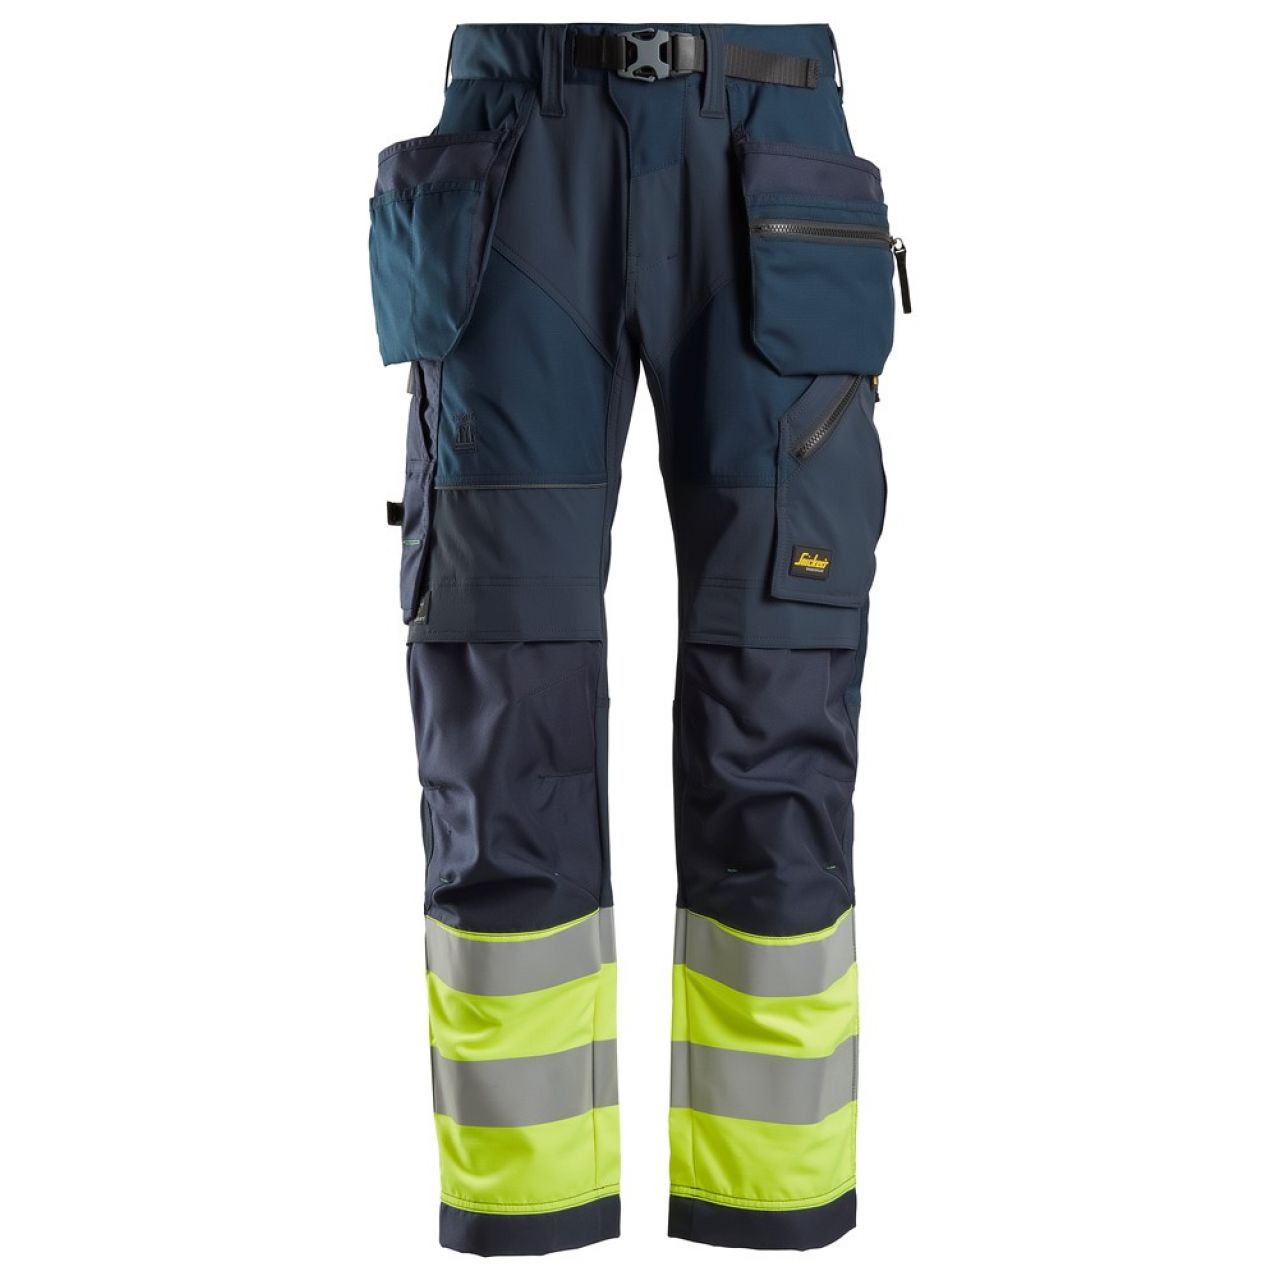 6931 Pantalones largos de trabajo de alta visibilidad clase 1 con bolsillos flotantes FlexiWork azul marino-amarillo talla 154